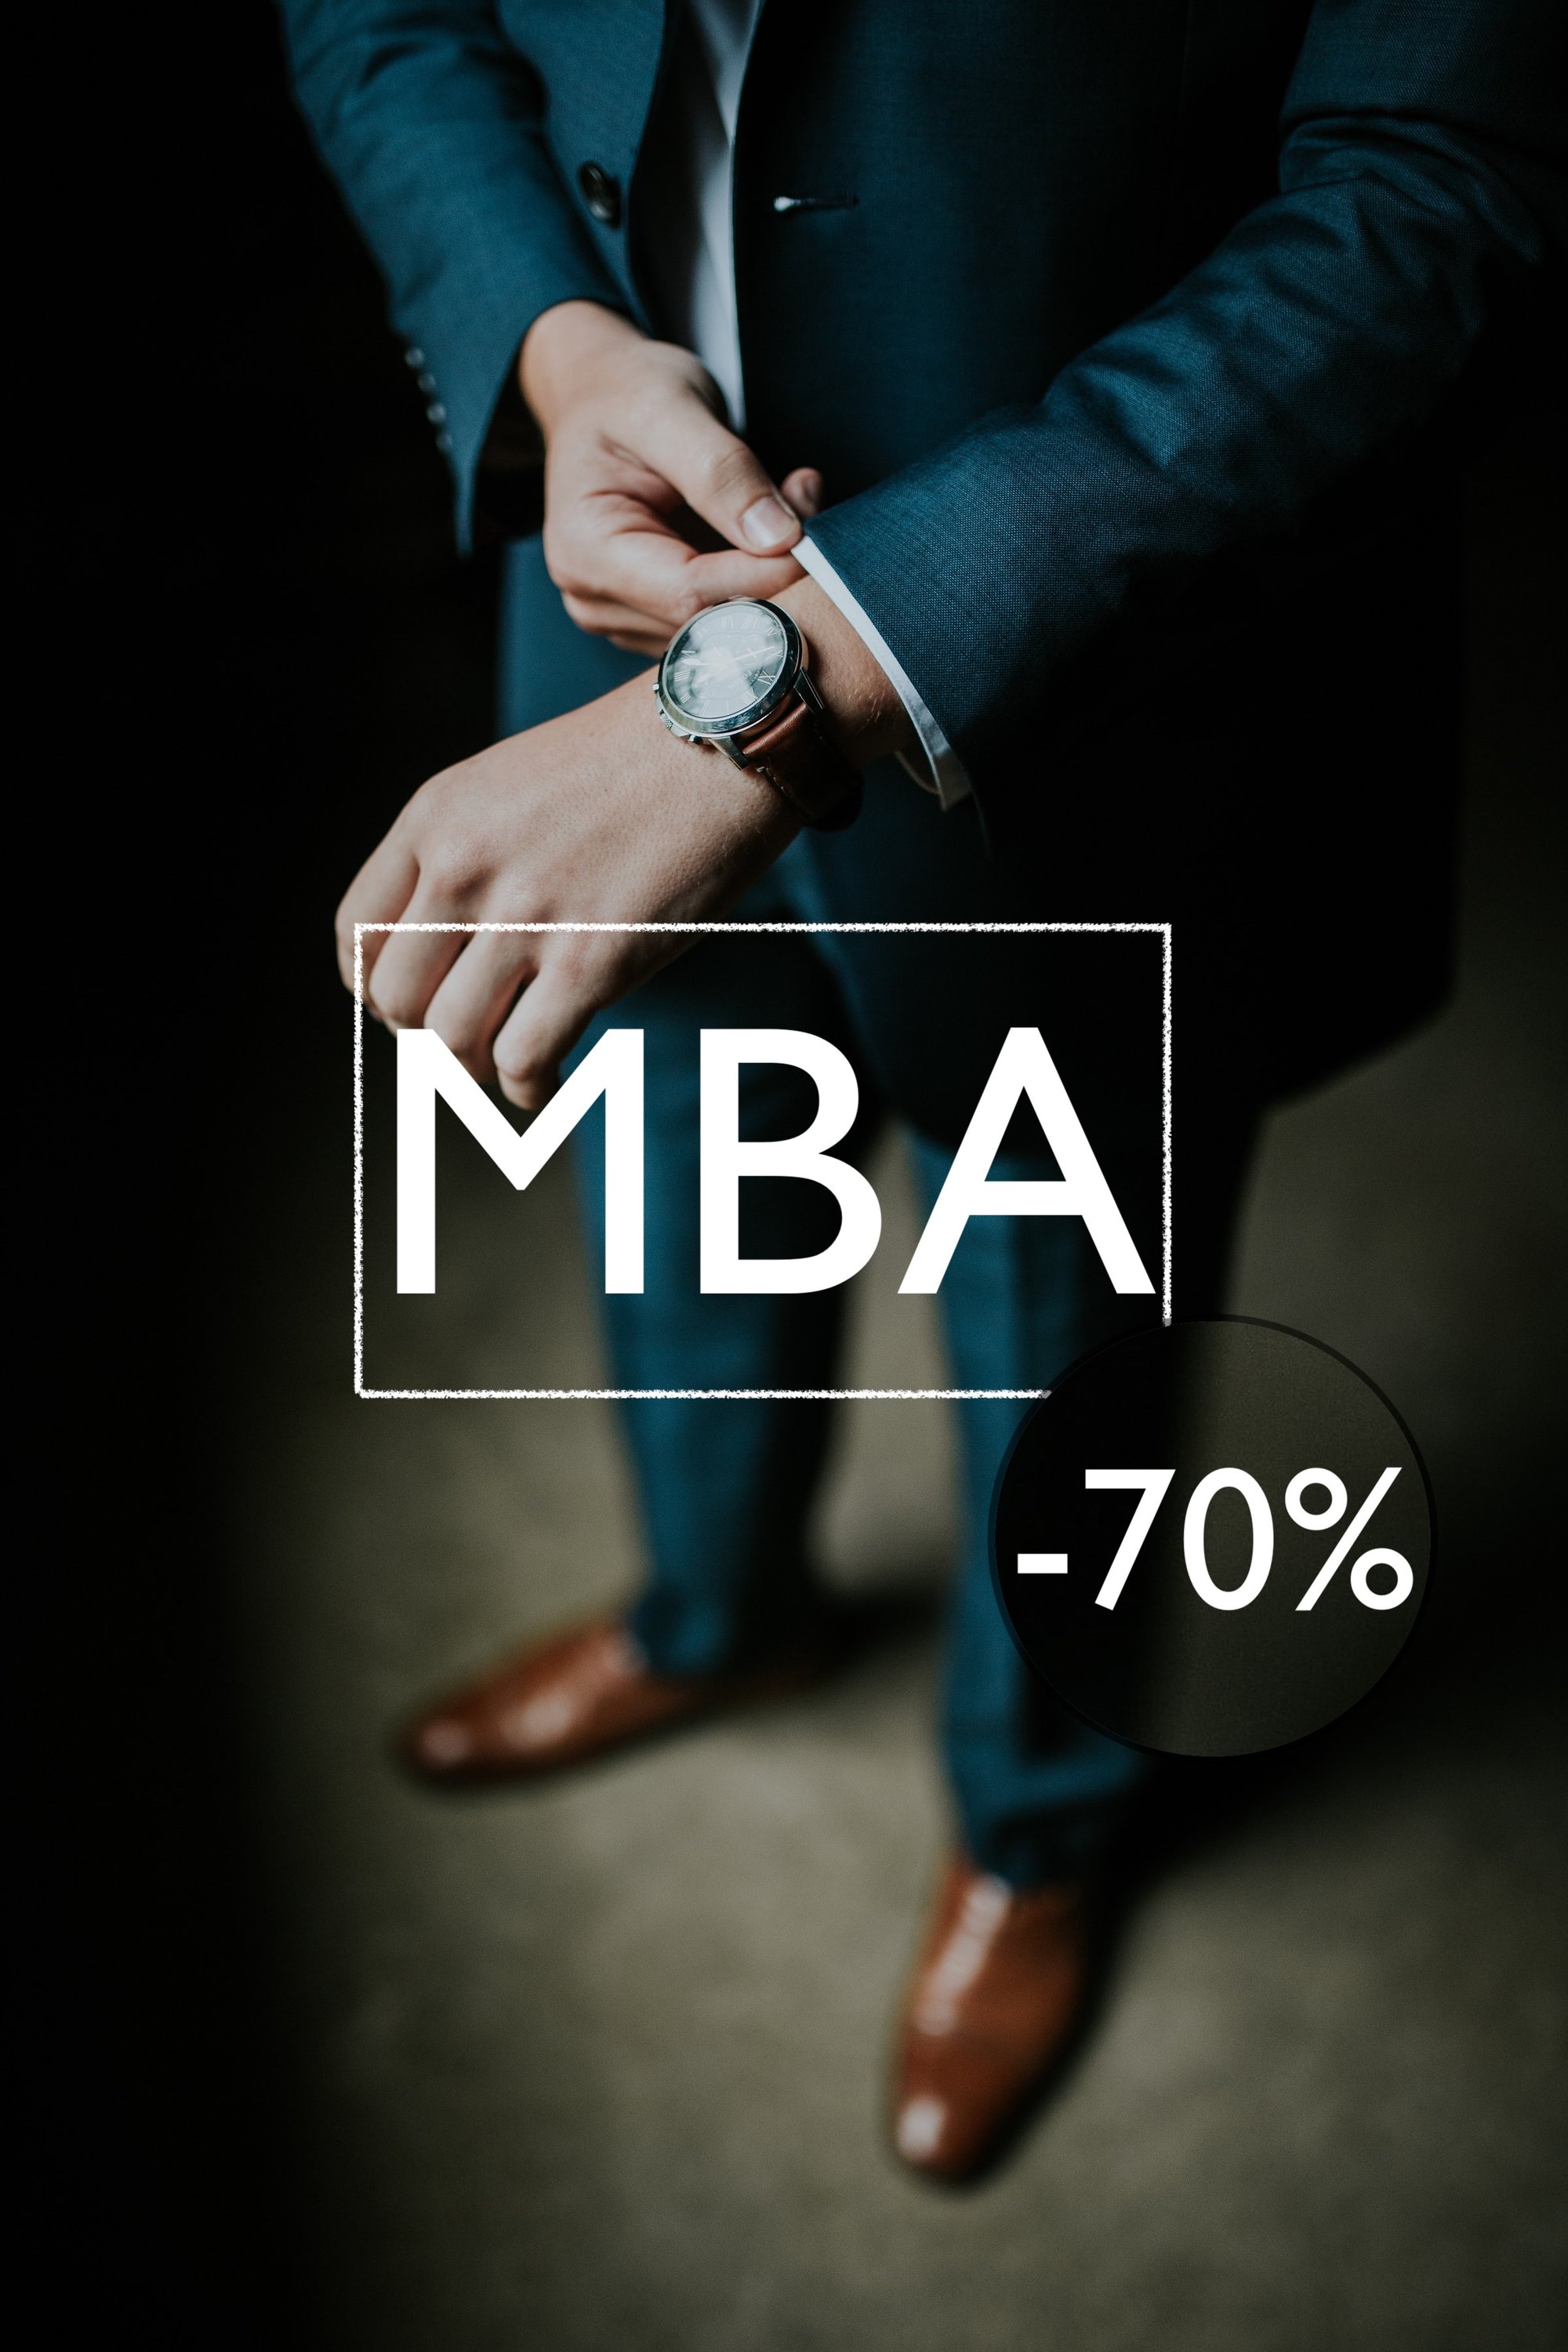 Мба россии. MBA школа. MBA В картинках. МБА скул. MBA Creative School Москва.